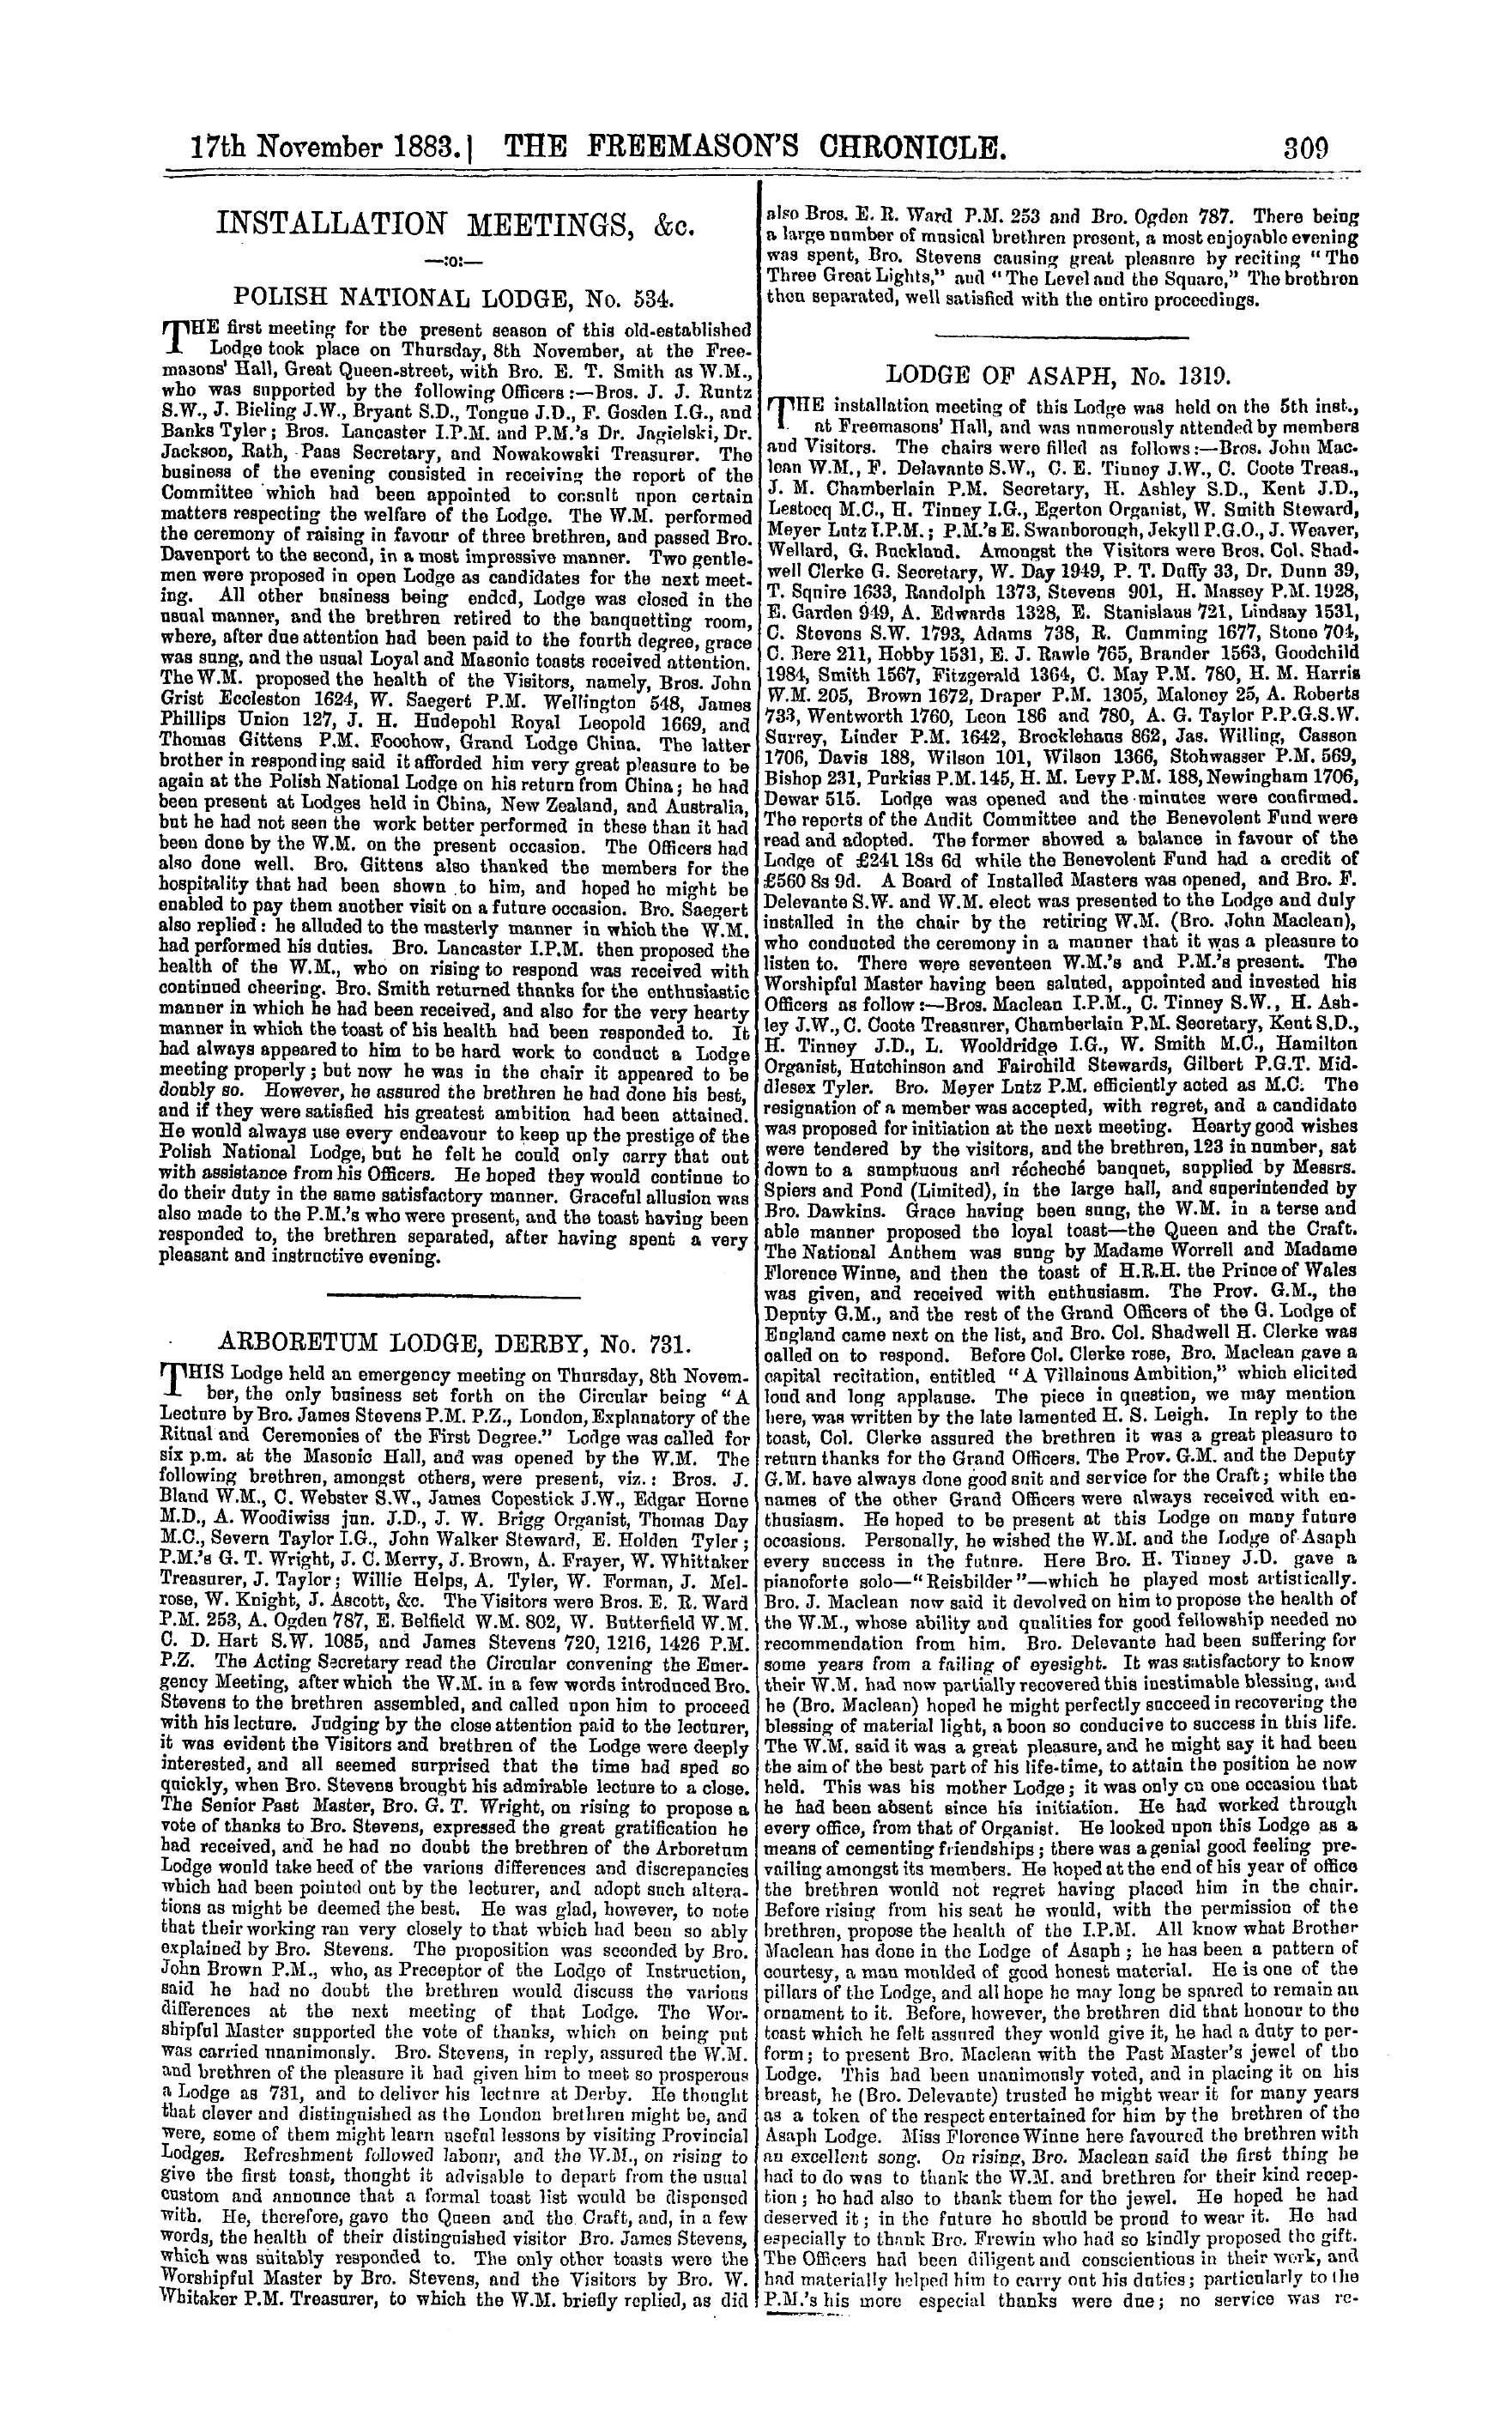 The Freemason's Chronicle: 1883-11-17 - Arboretum Lodge, Derby No. 731.